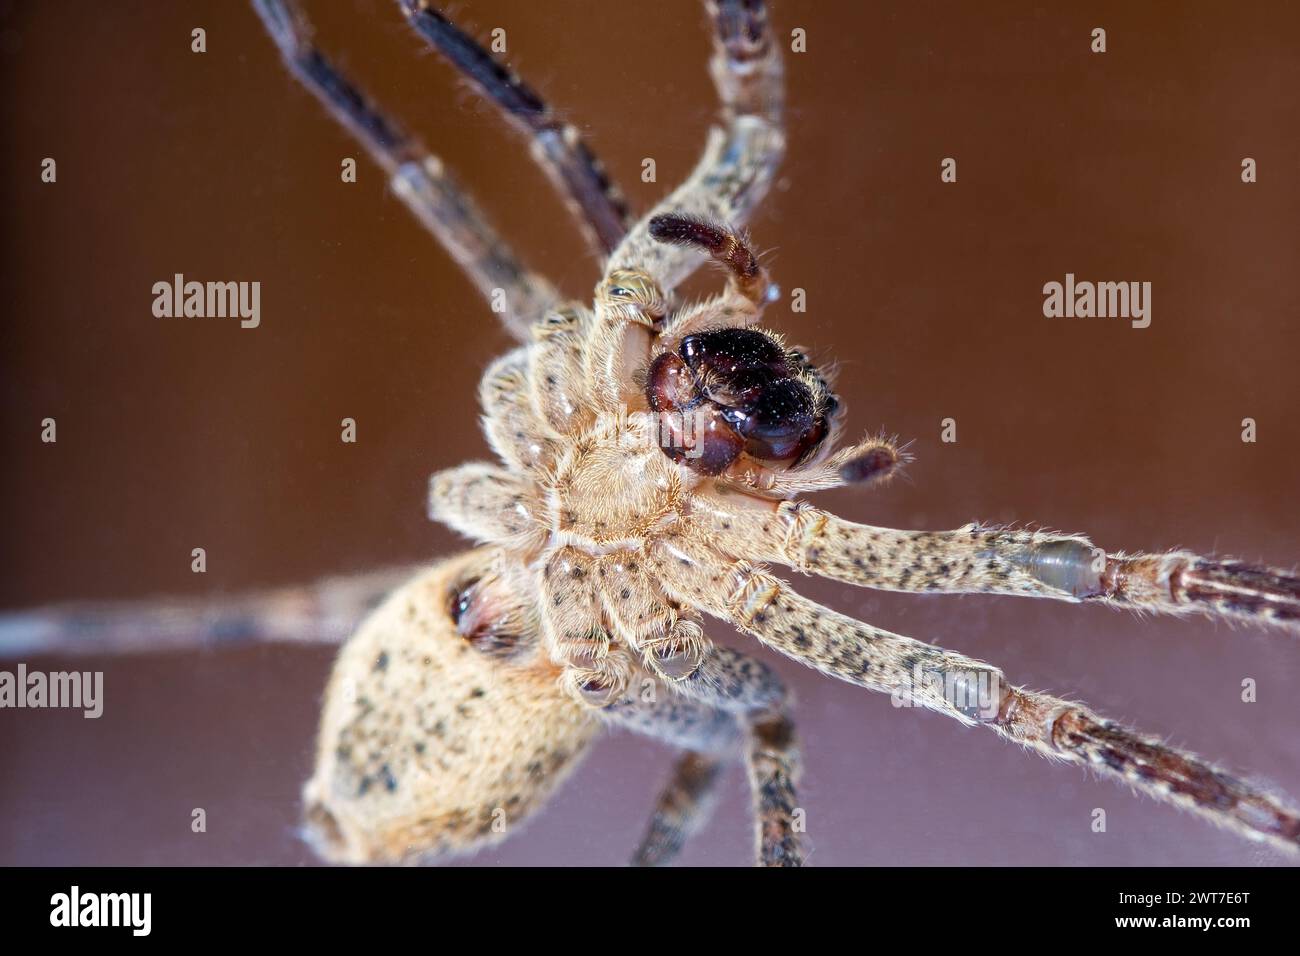 Nosferatu spider, trapped under glass, portrait, macro, bottom side Stock Photo